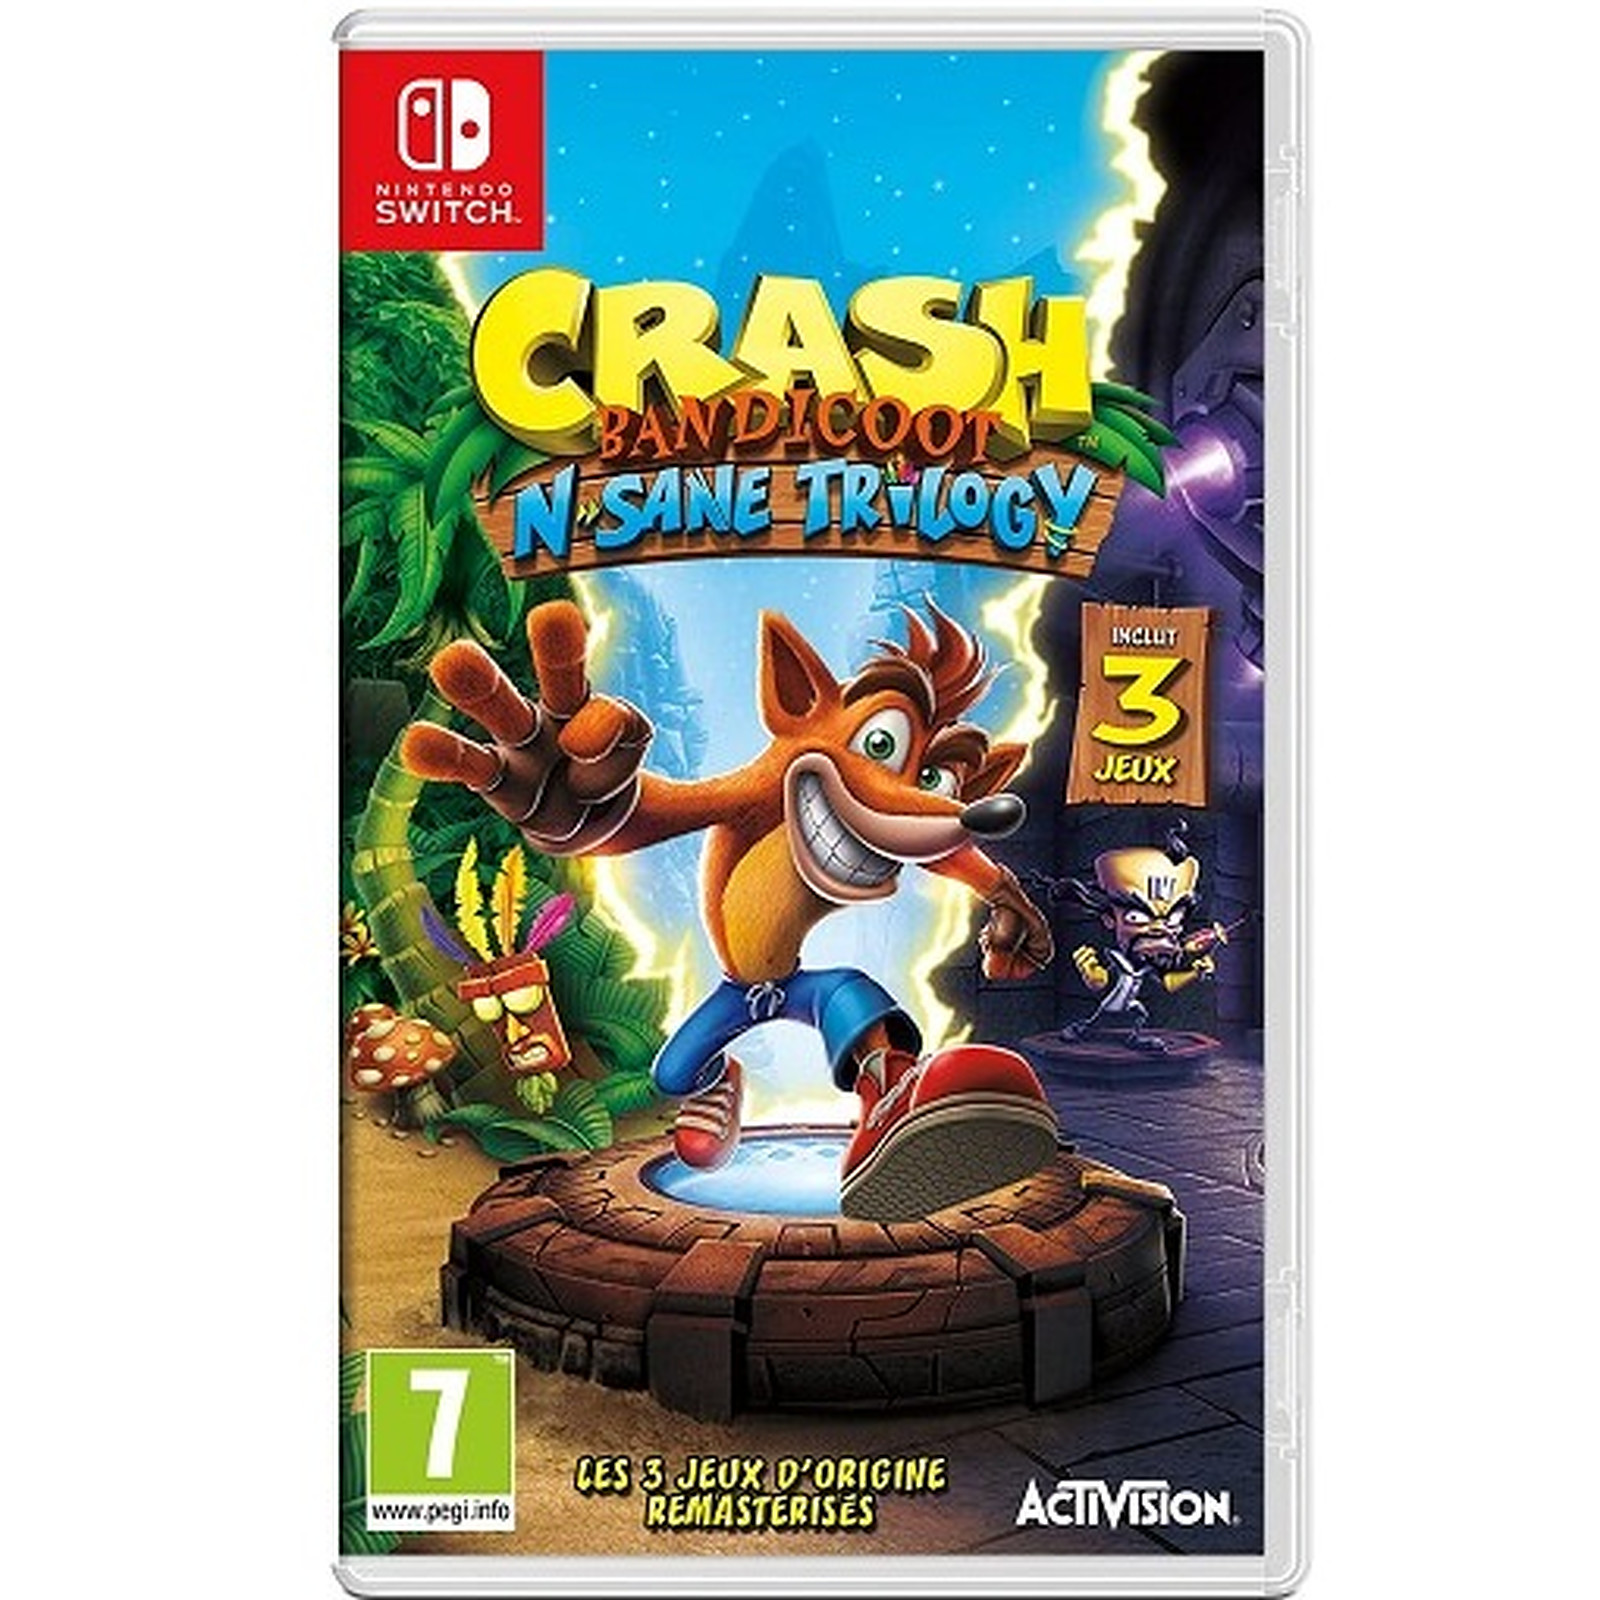 Crash Bandicoot N.sane trilogy (SWITCH) - Jeux Nintendo Switch Activision